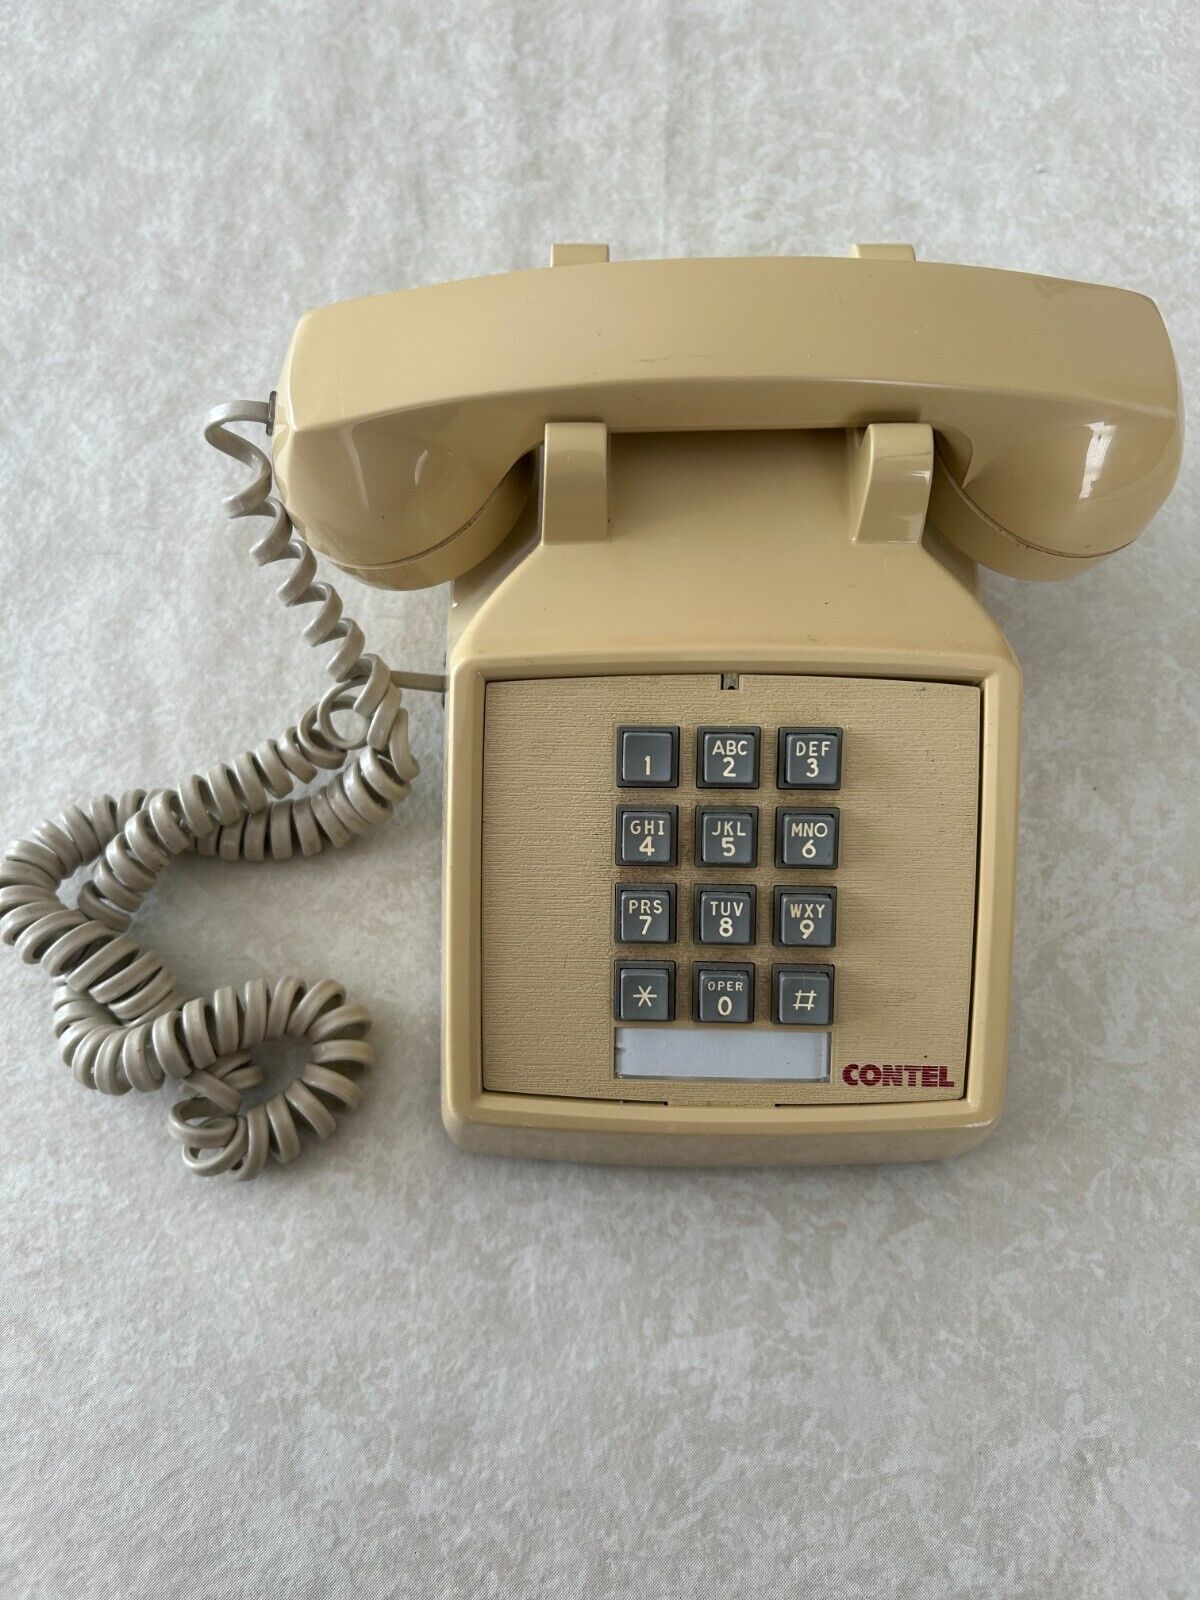 Vintage ITT Contel Push Button Phone (Working)